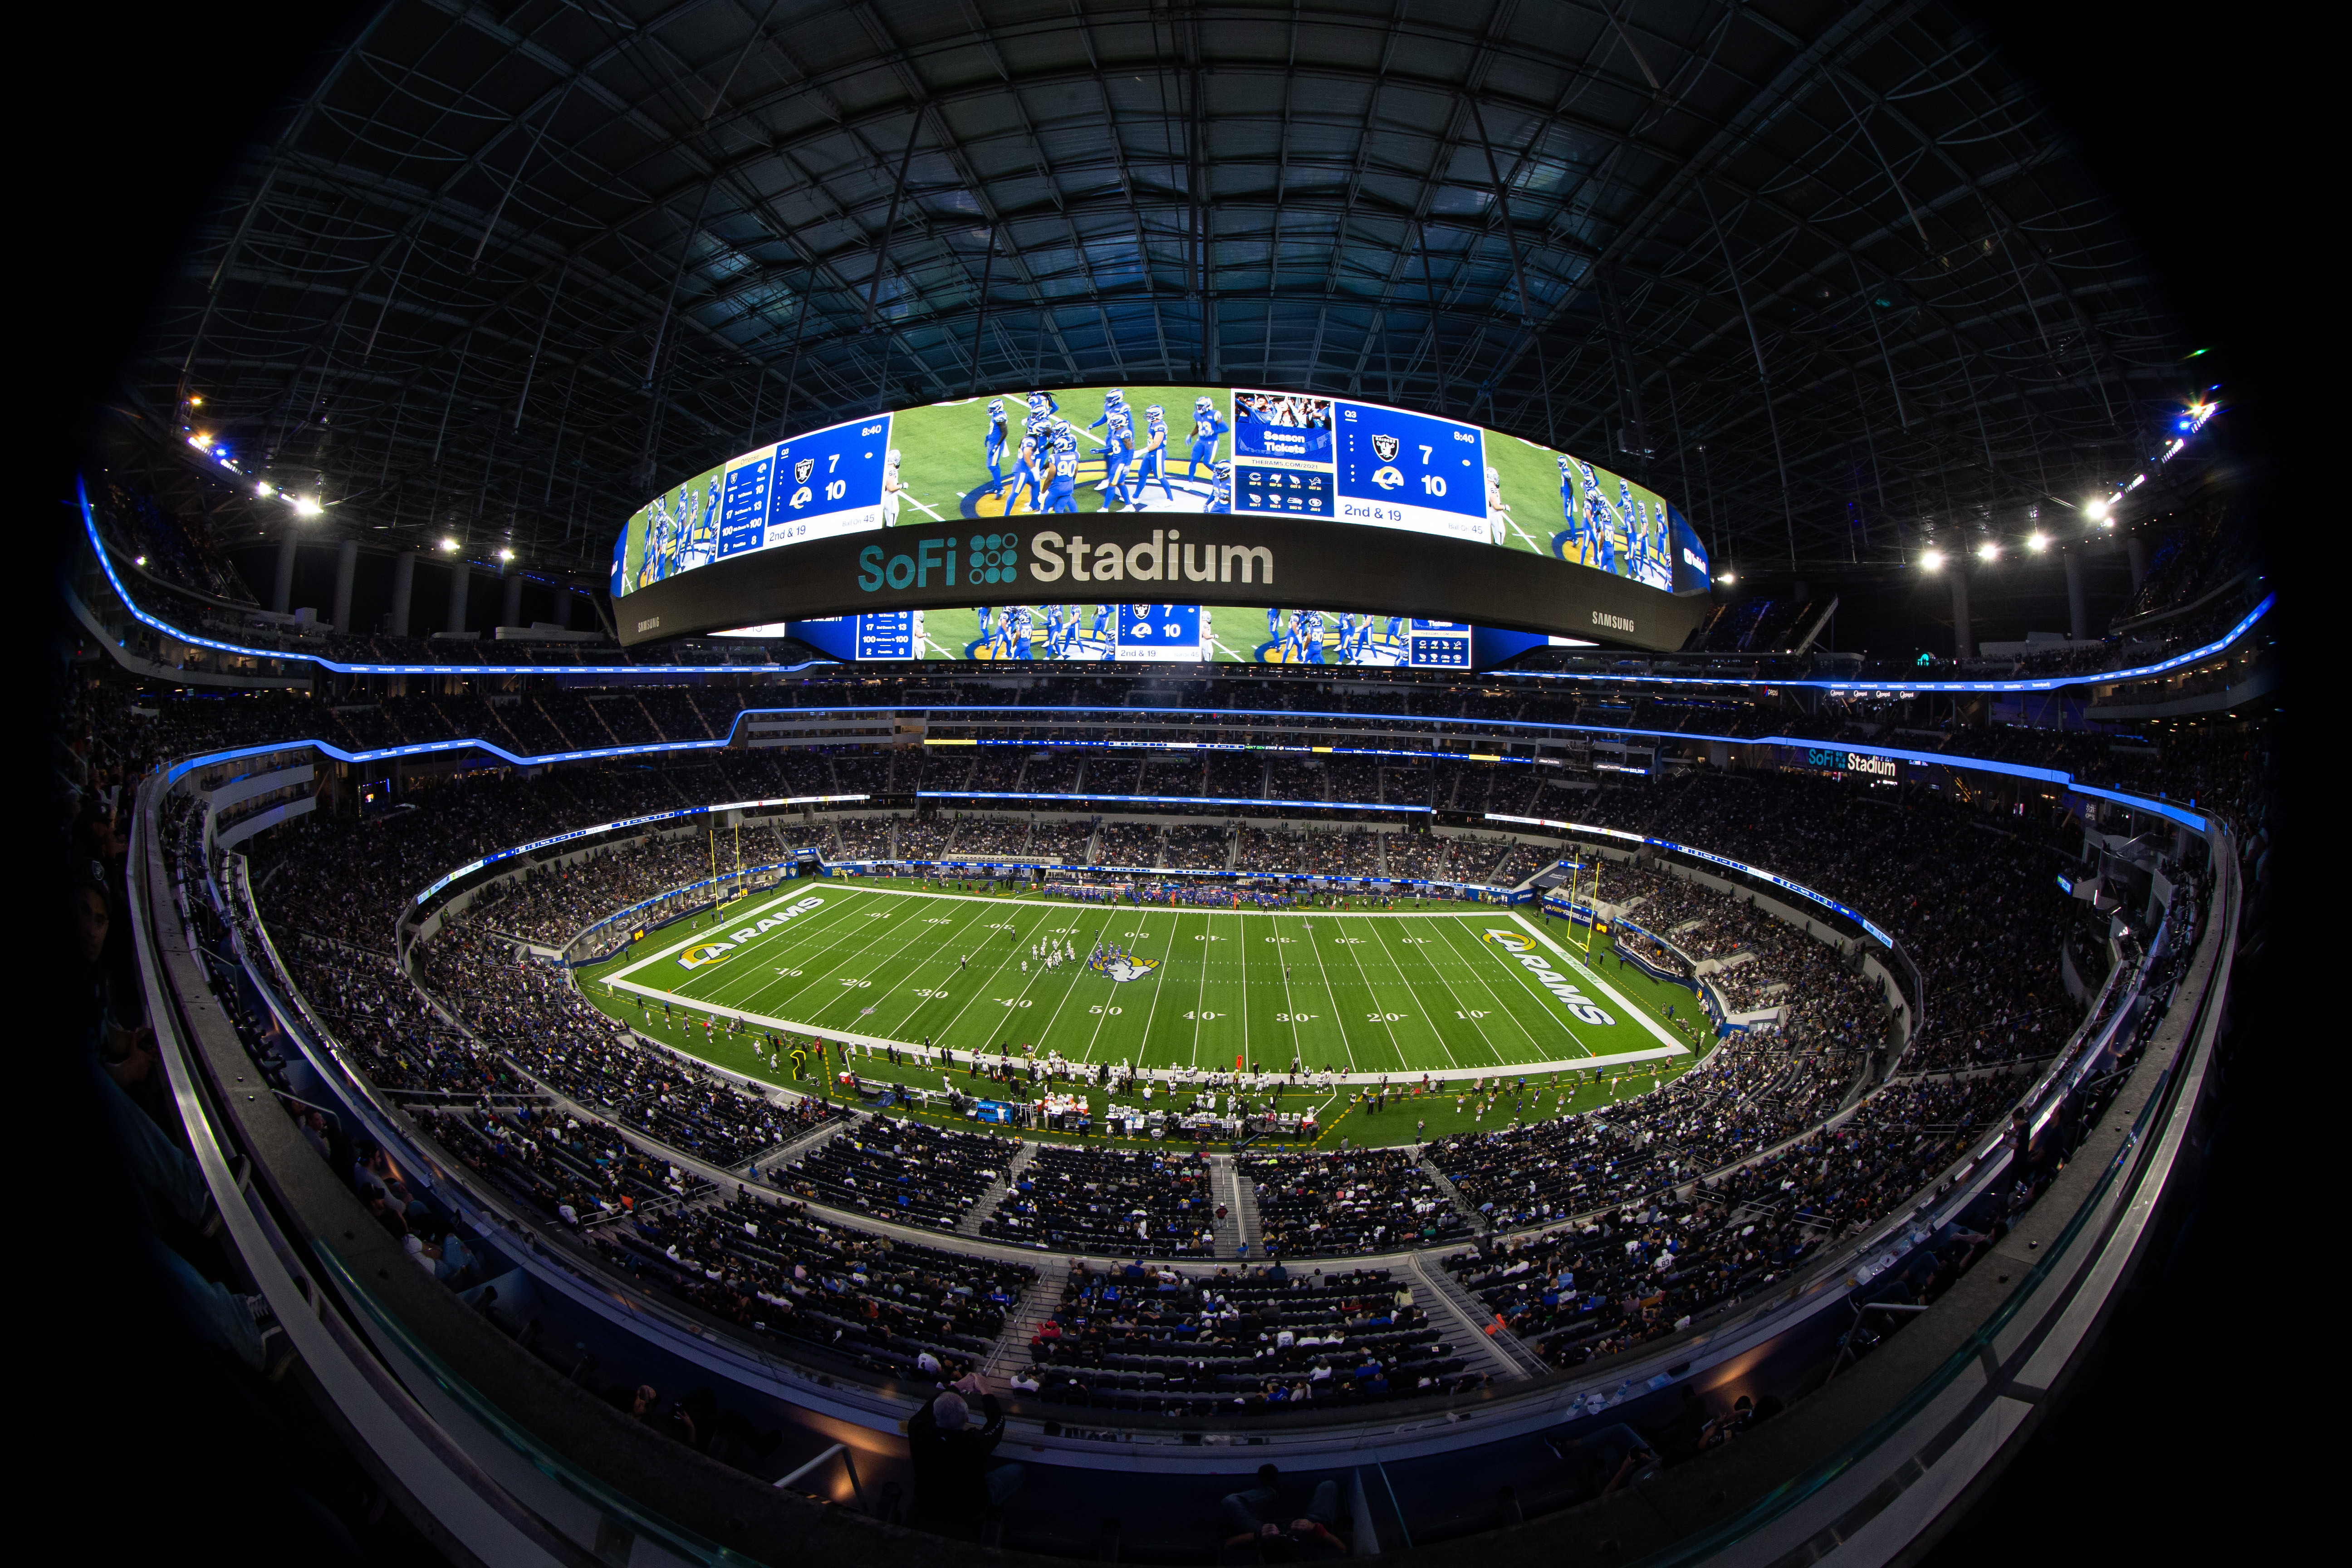 Stadium Talk: Does SoFi Stadium look like the Rams logo? - Bolts